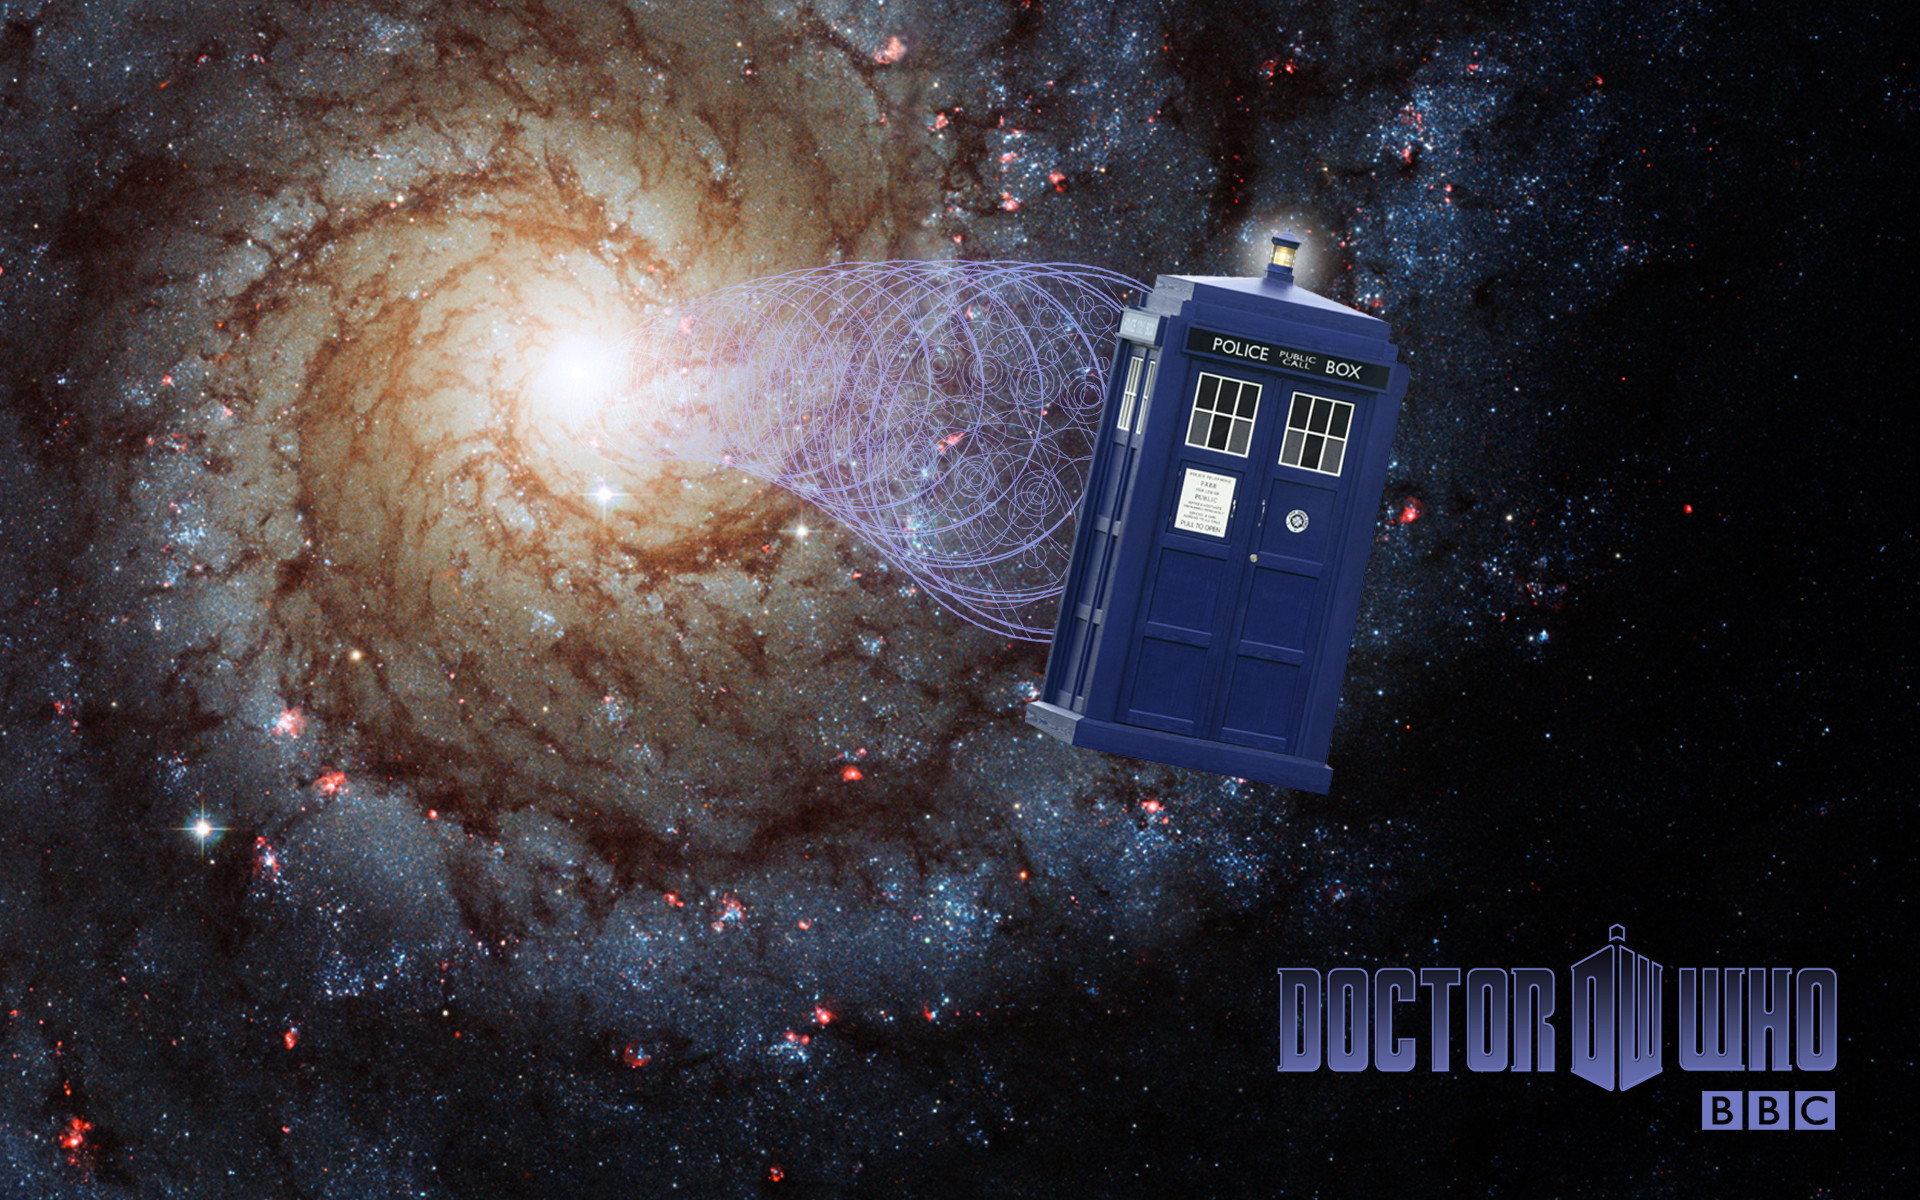 Doctor Who Tardis Desktop Doctor Who Wallpapers Tardis